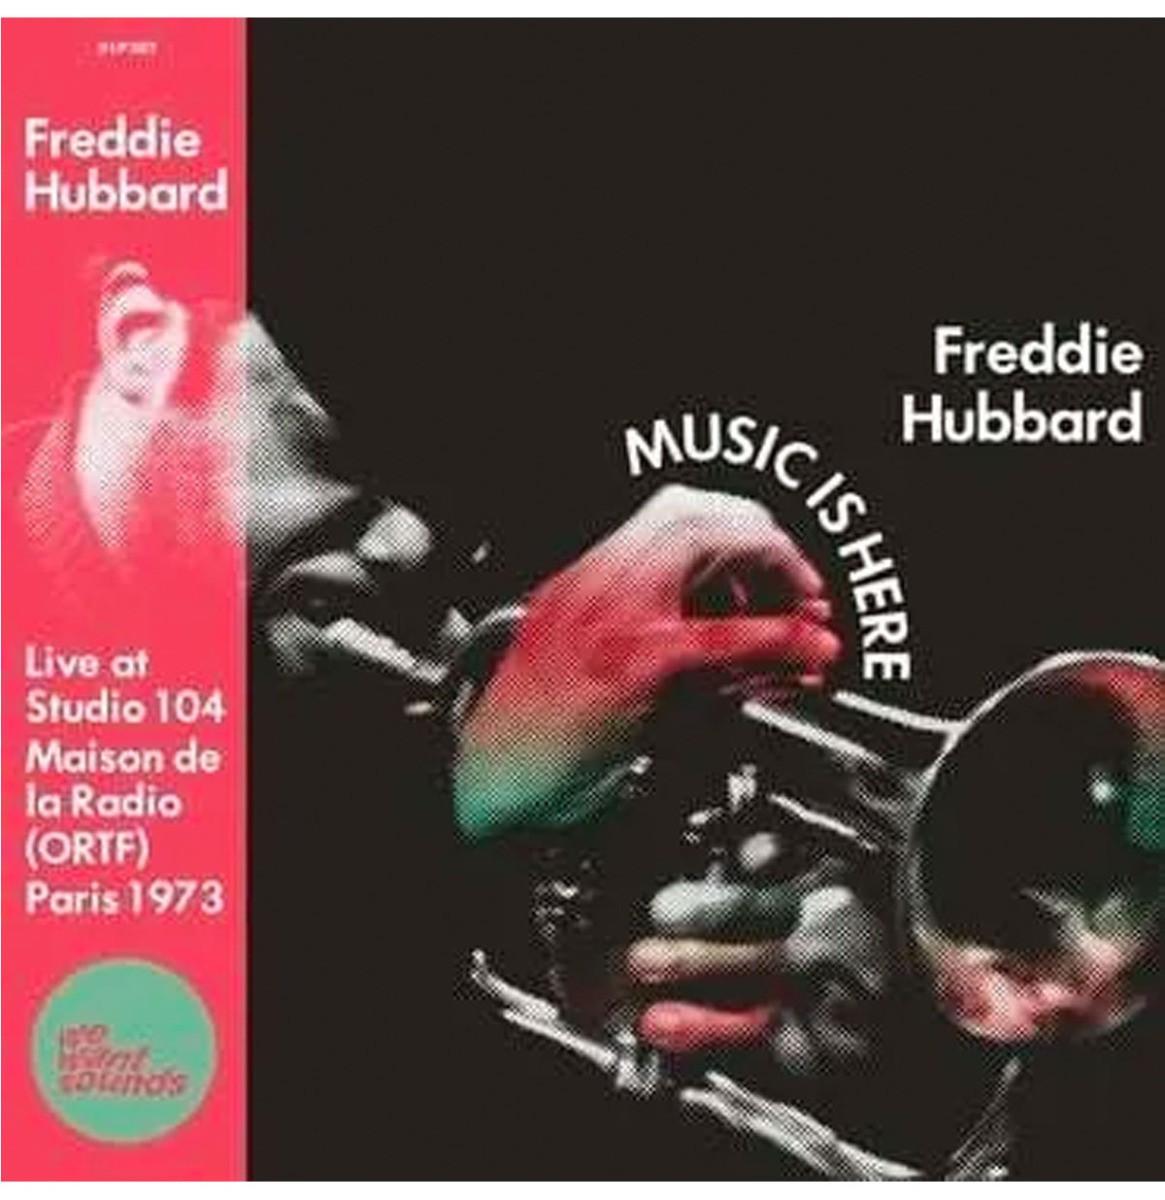 Freddie Hubbard - Music Is Here: Live at Maison De La Radio (ORTF), Paris 1973 (Record Store Day 2022) LP